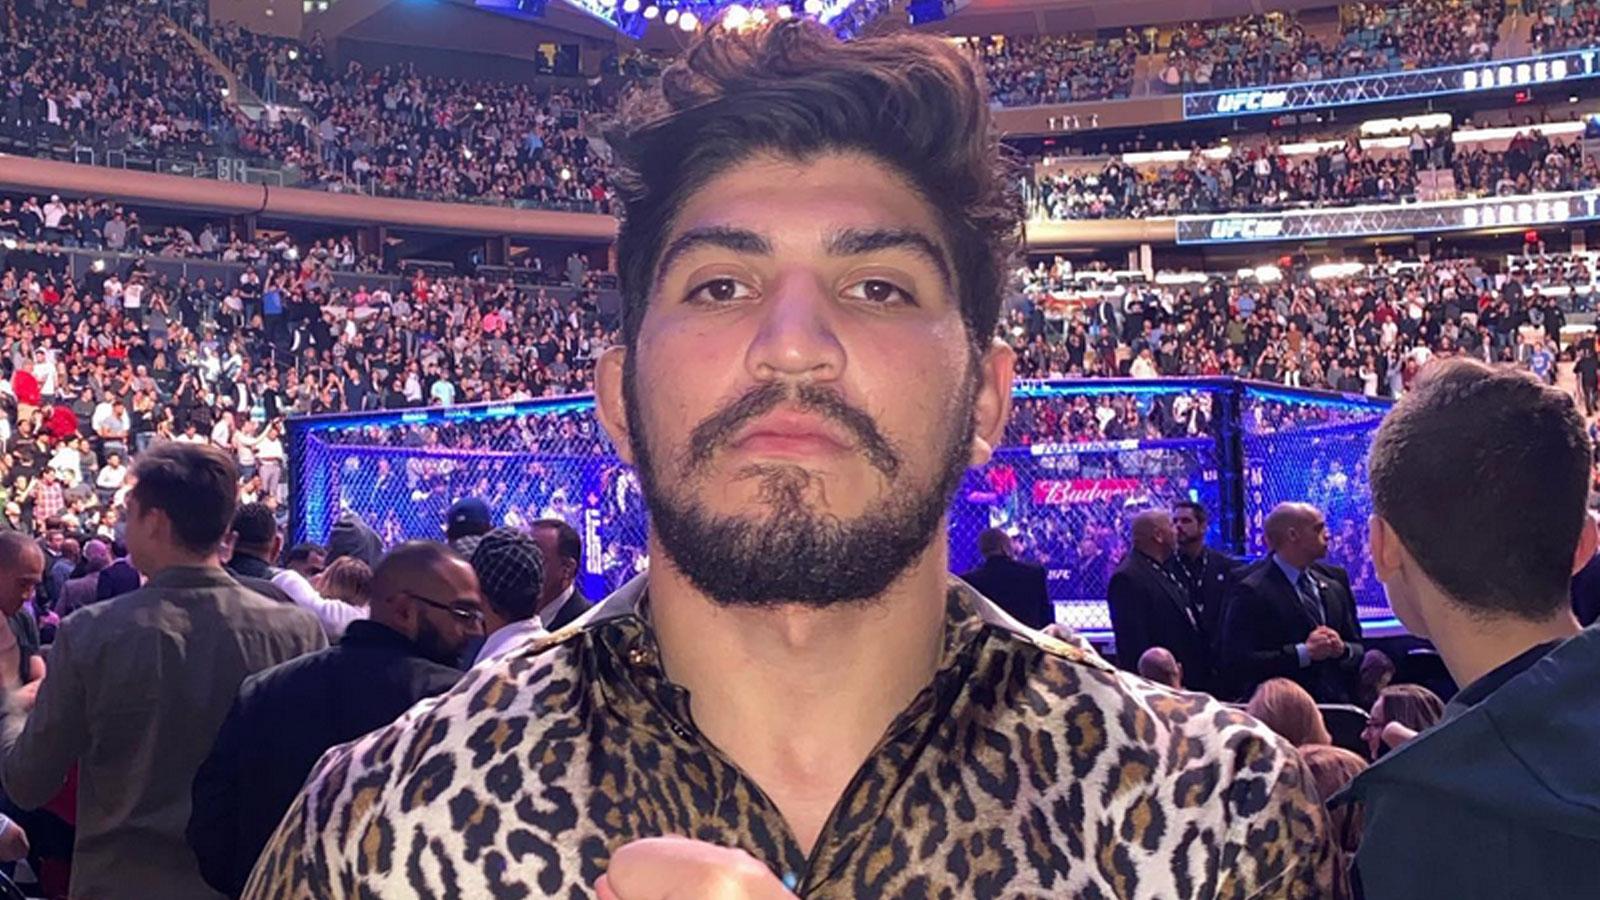 Dillon Danis wearing leopard print shirt at UFC event